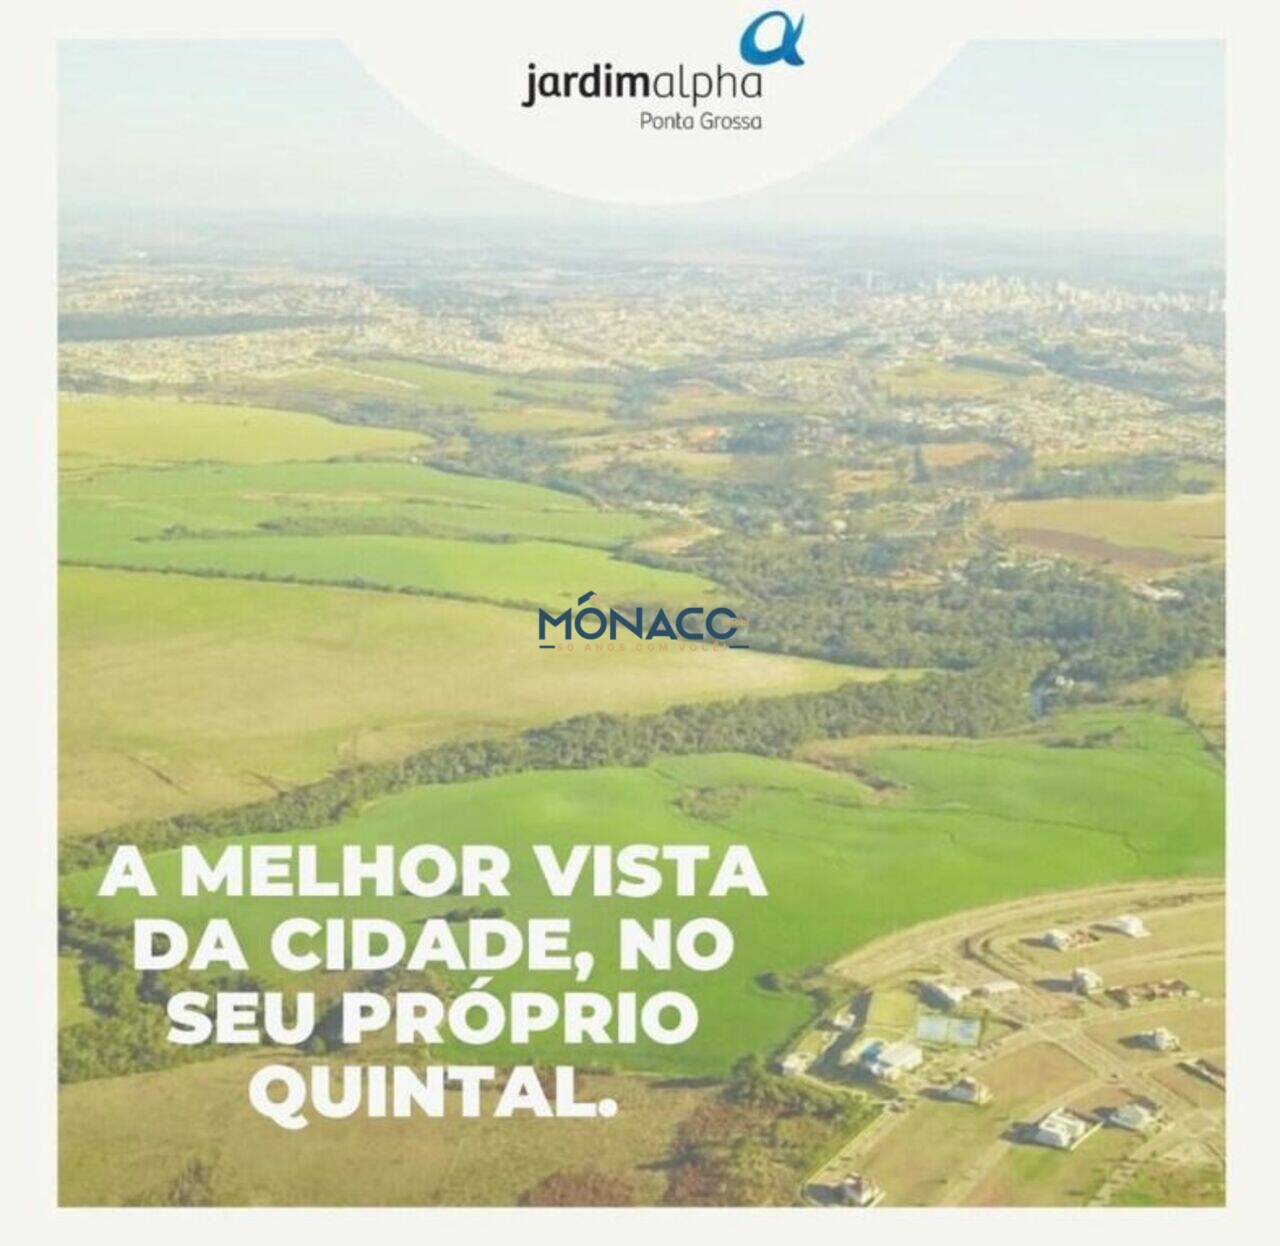 Terreno Jardim Carvalho, Ponta Grossa - PR